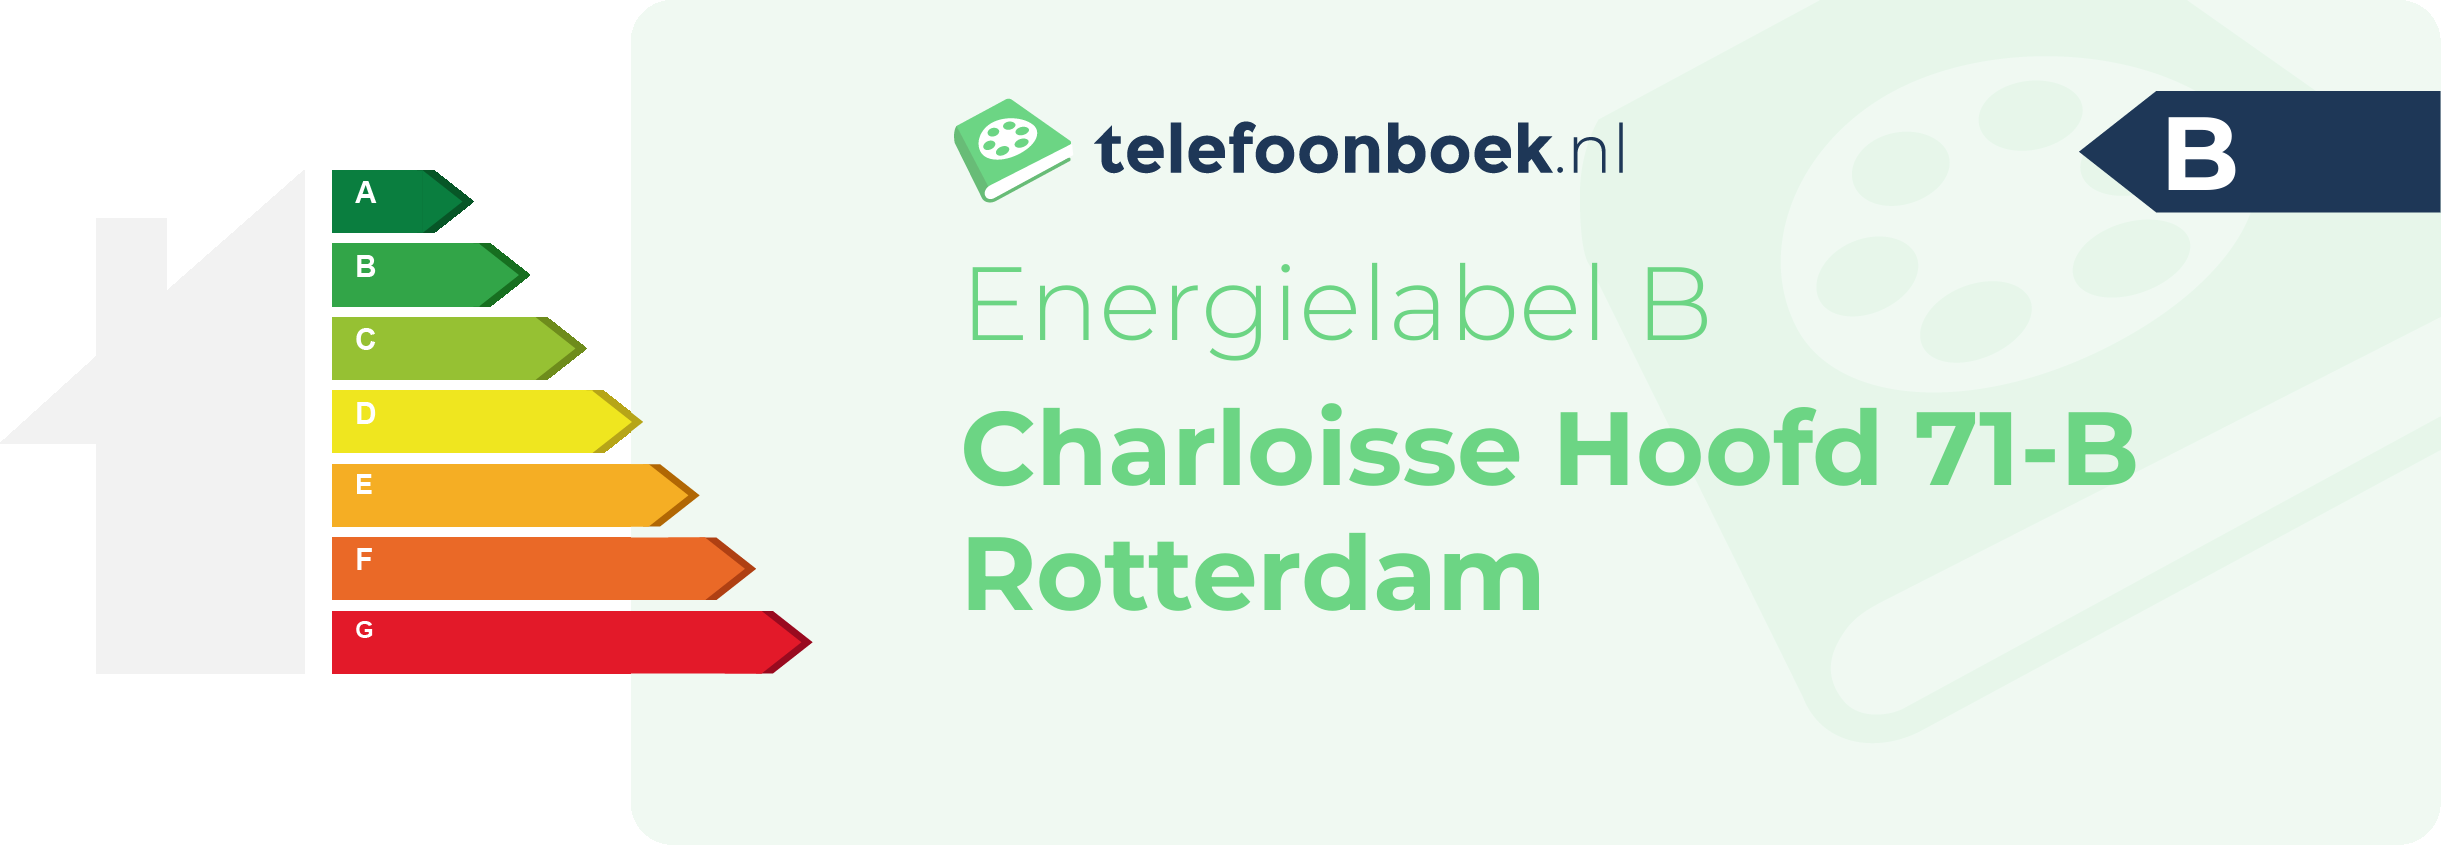 Energielabel Charloisse Hoofd 71-B Rotterdam